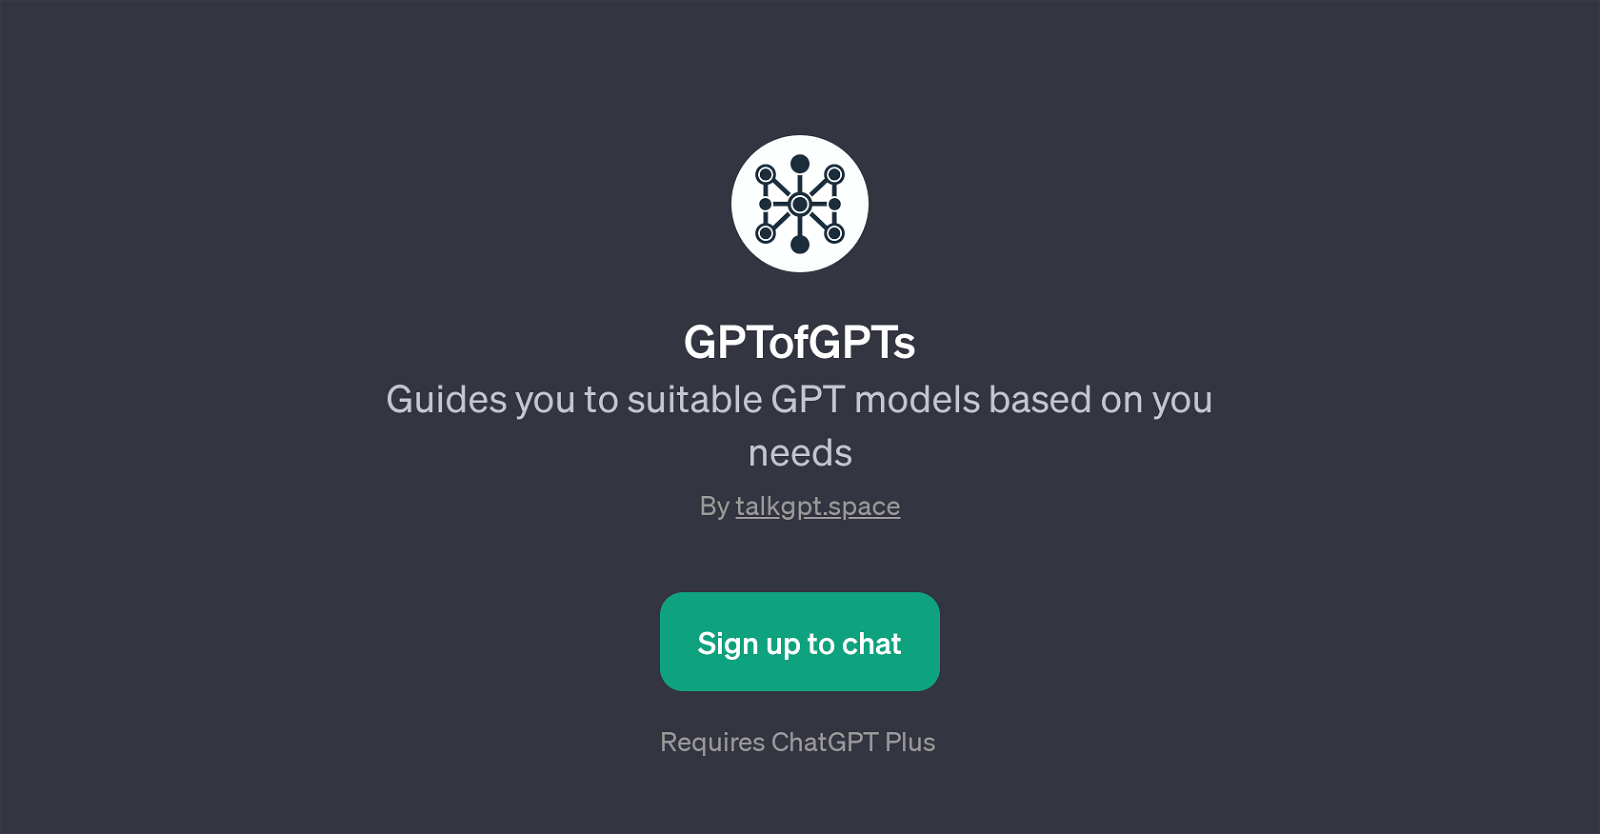 GPTofGPTs website